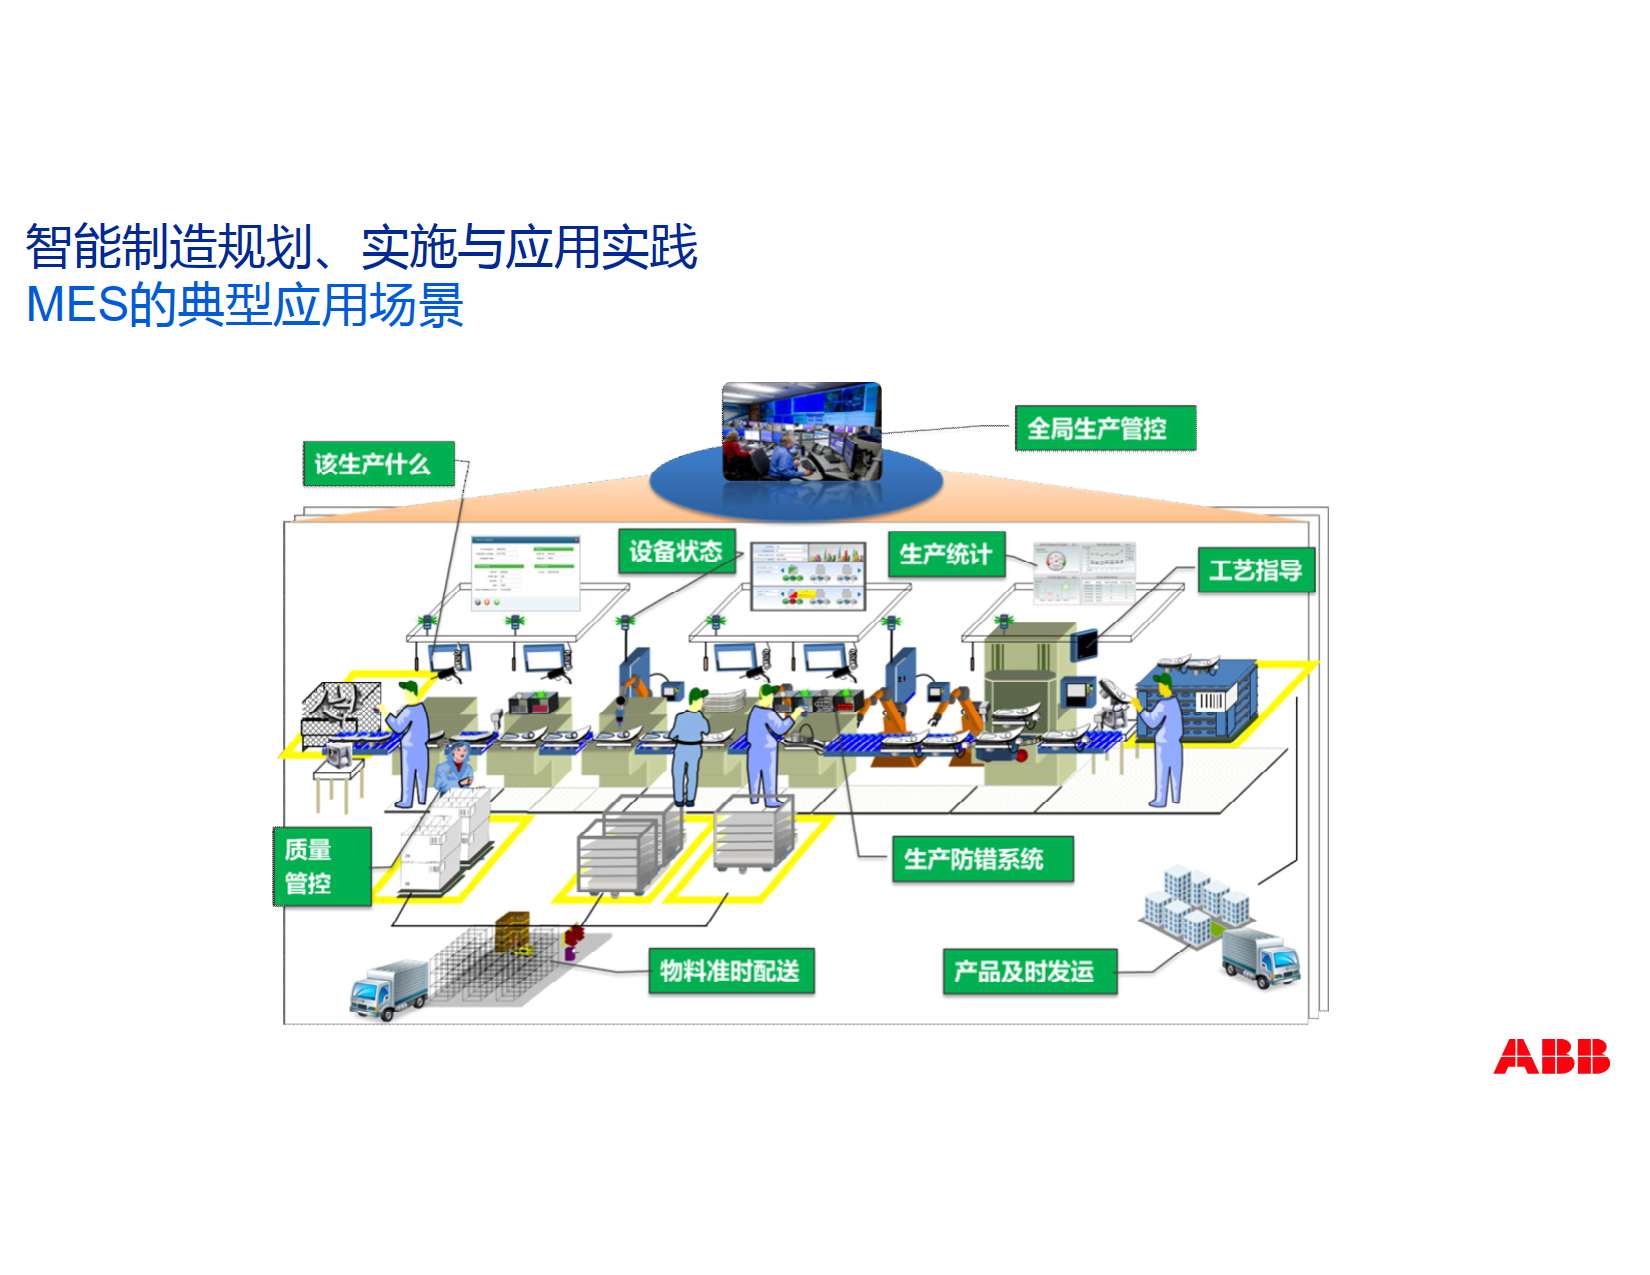 ABB制造执行系统-MES，助力中国智能制造2025_ABB厦门办公室MES部经理 陈晋宝_3.png